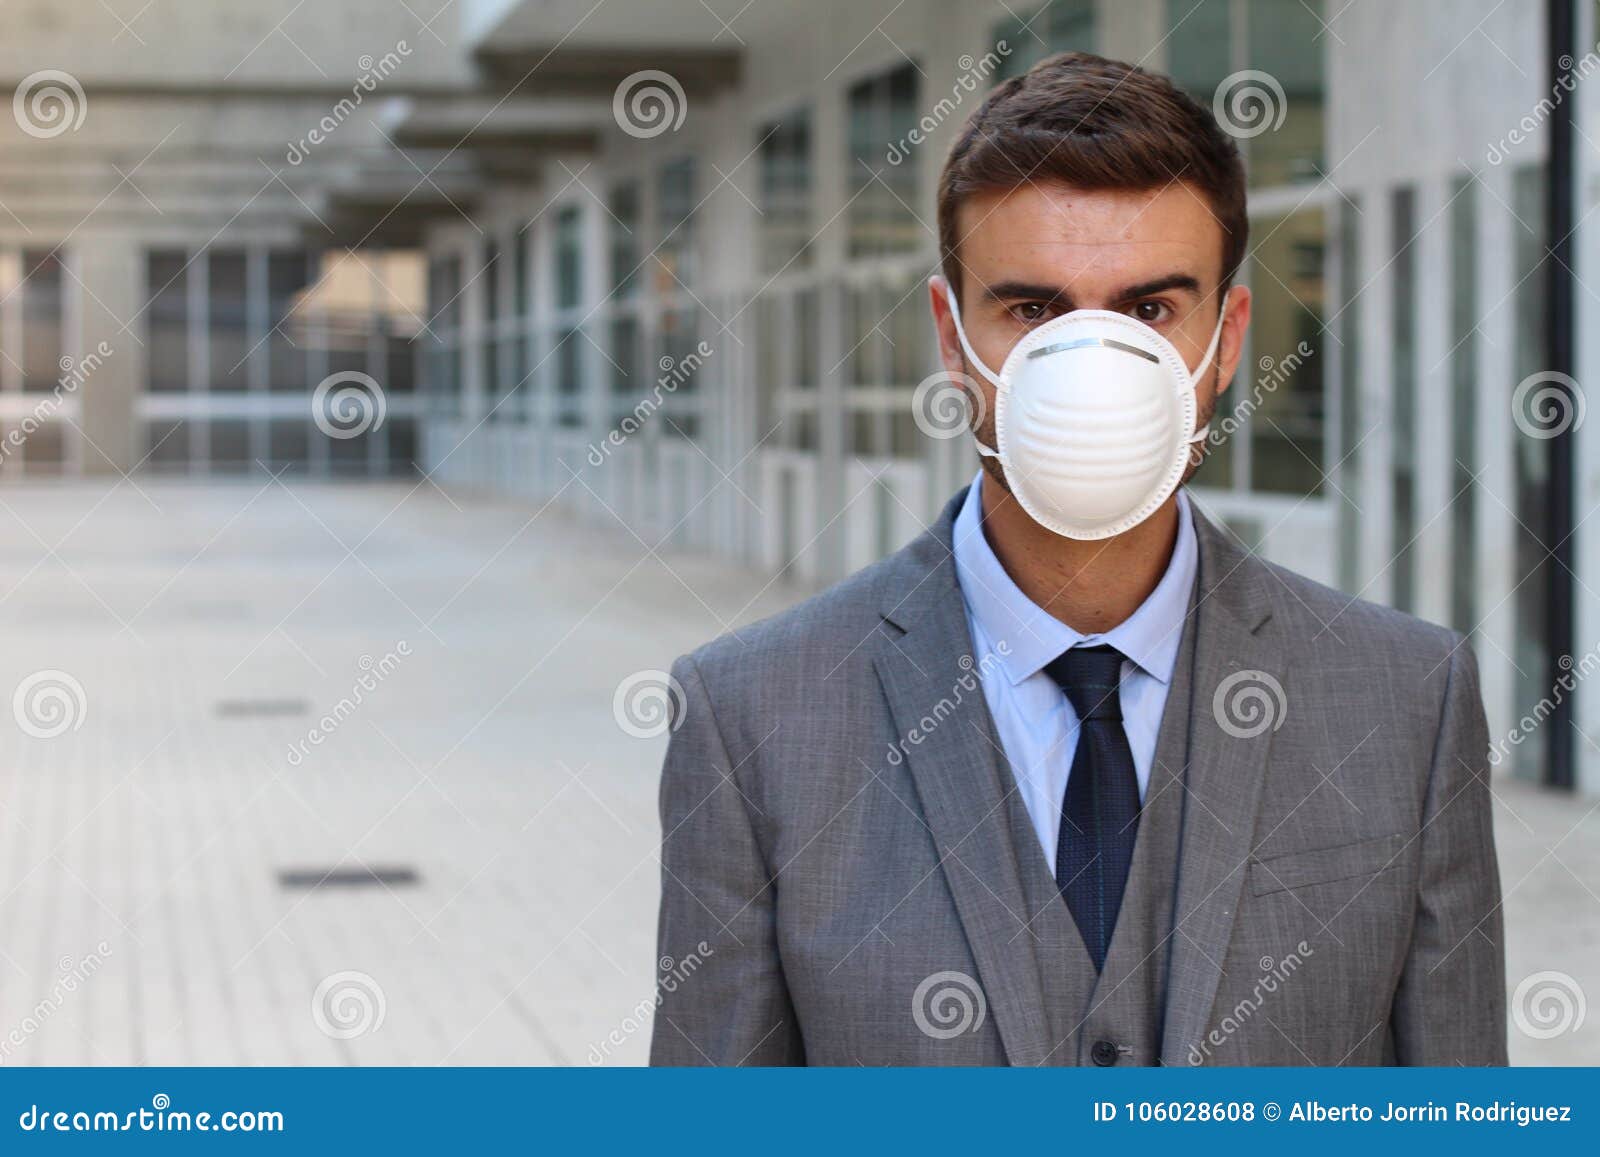 masque respiratoire homme